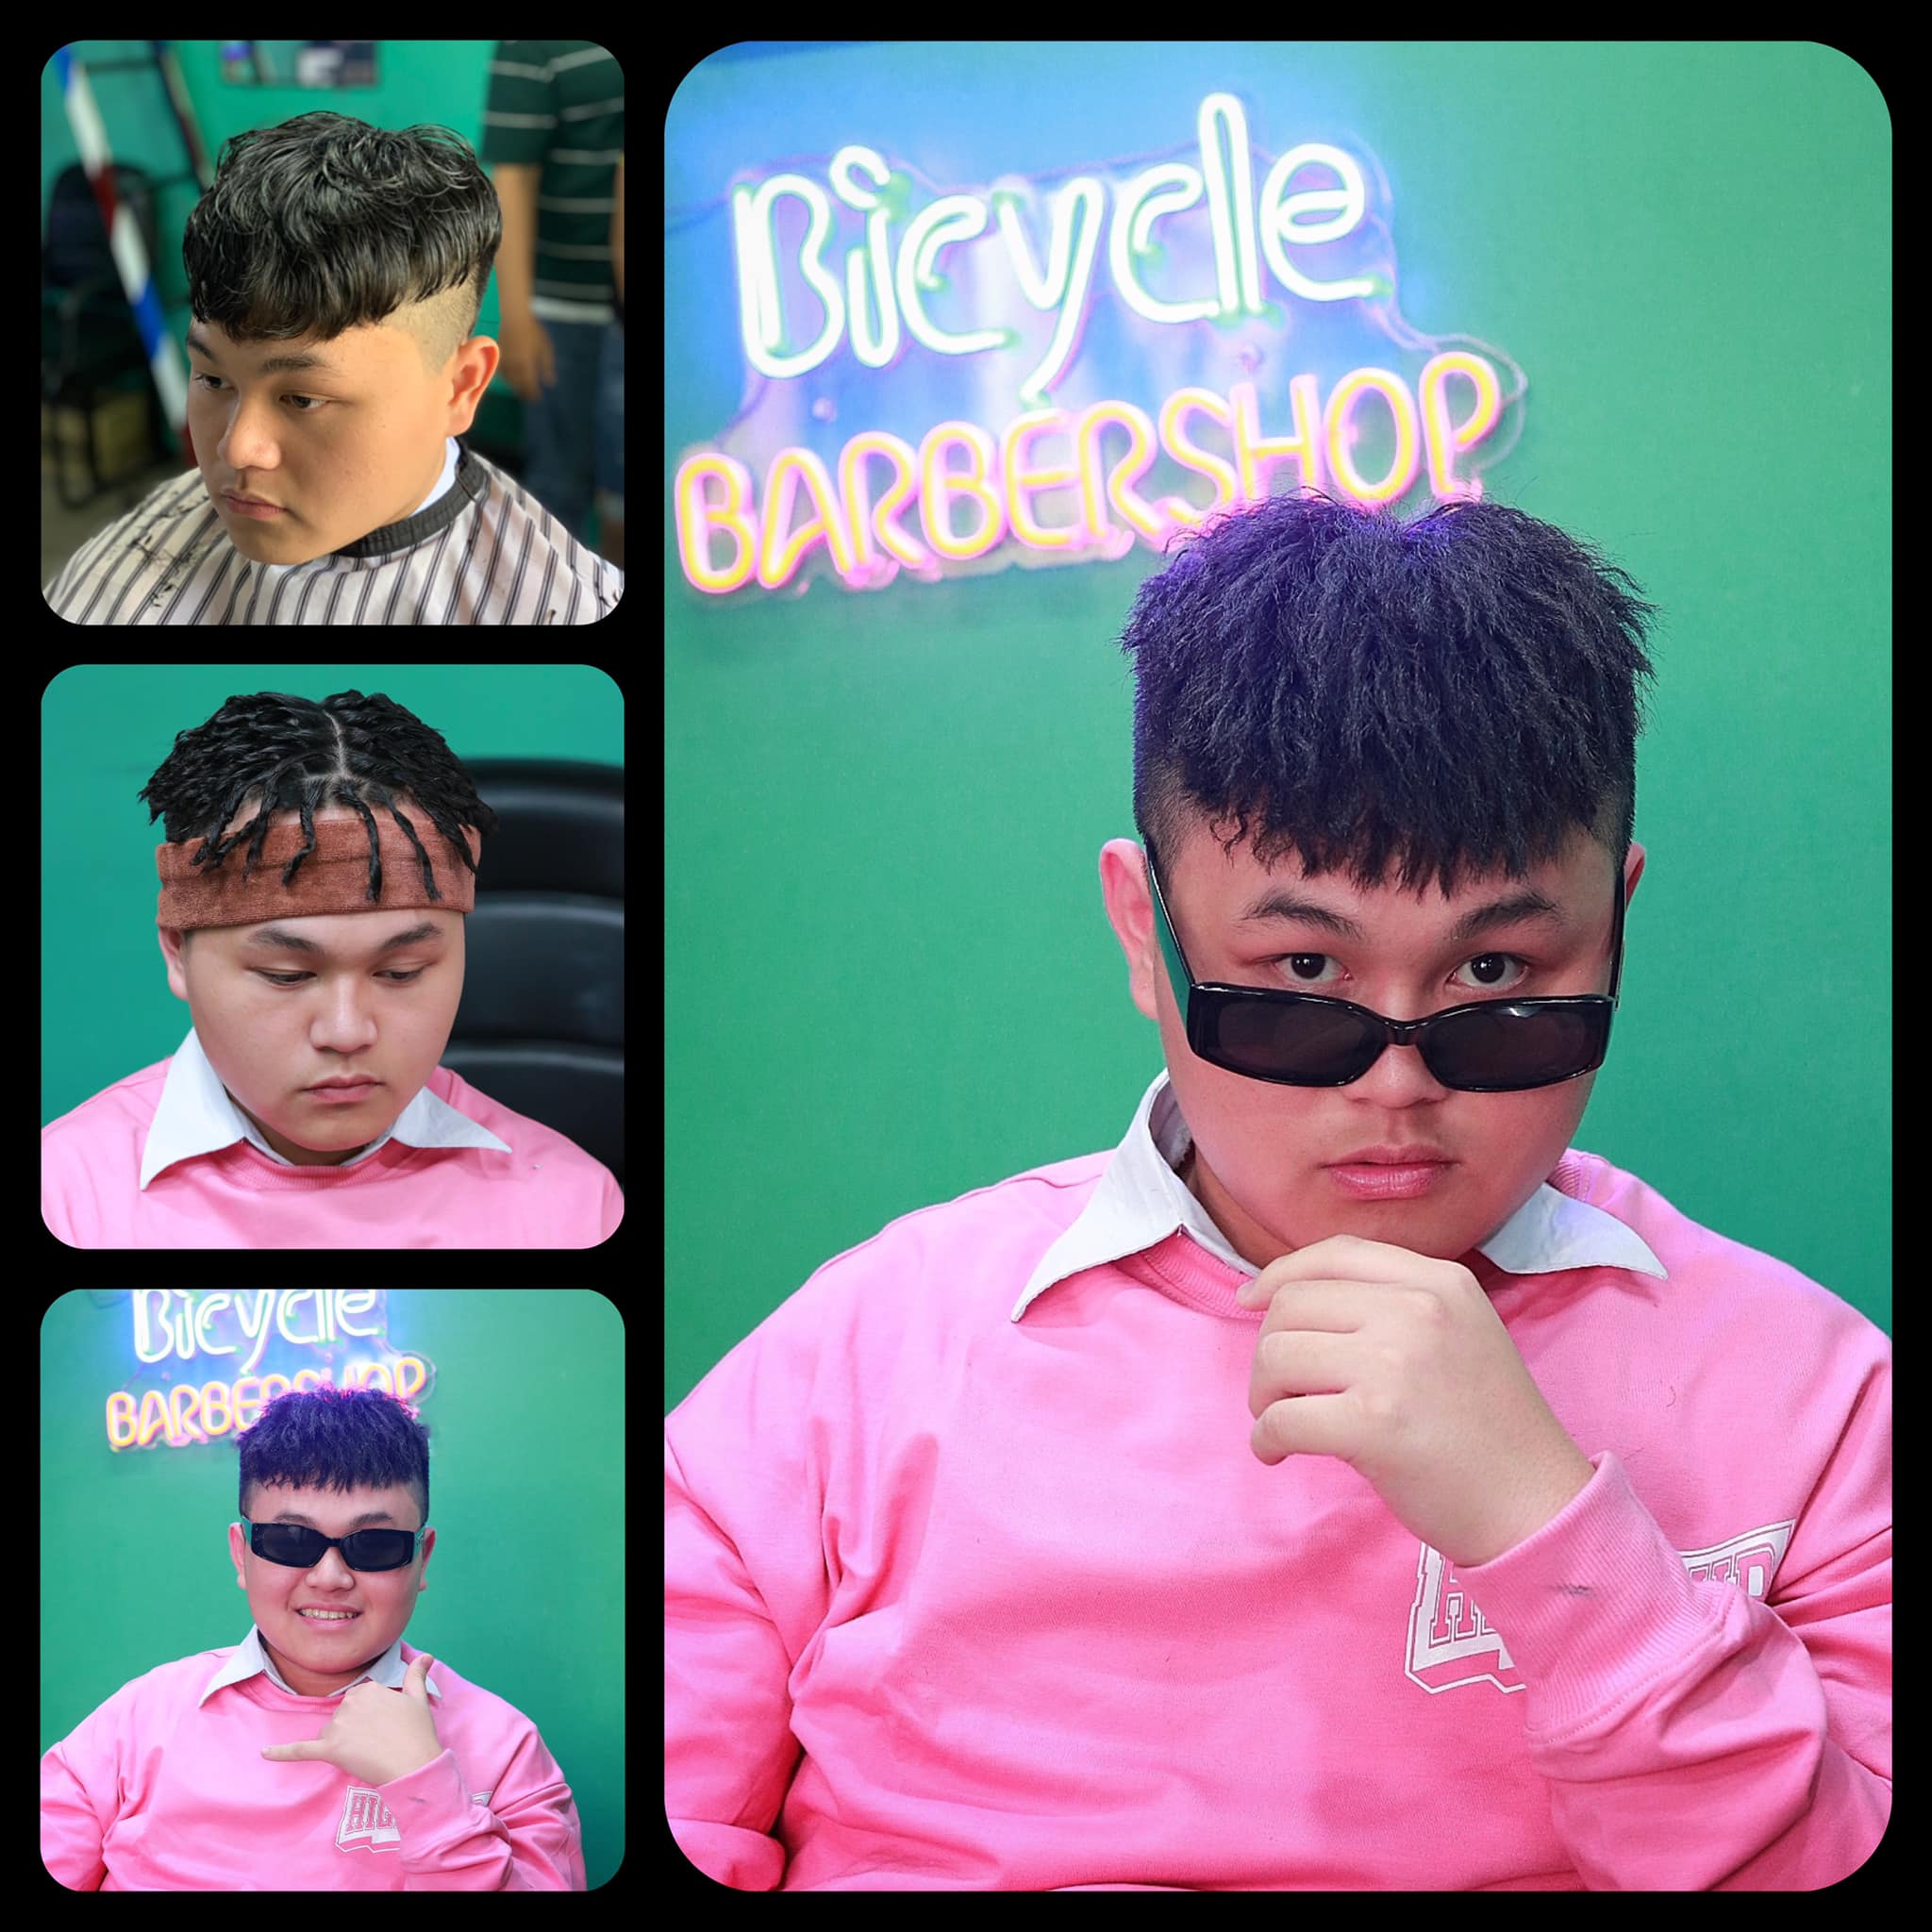 Bicycle Barber shop ảnh 2